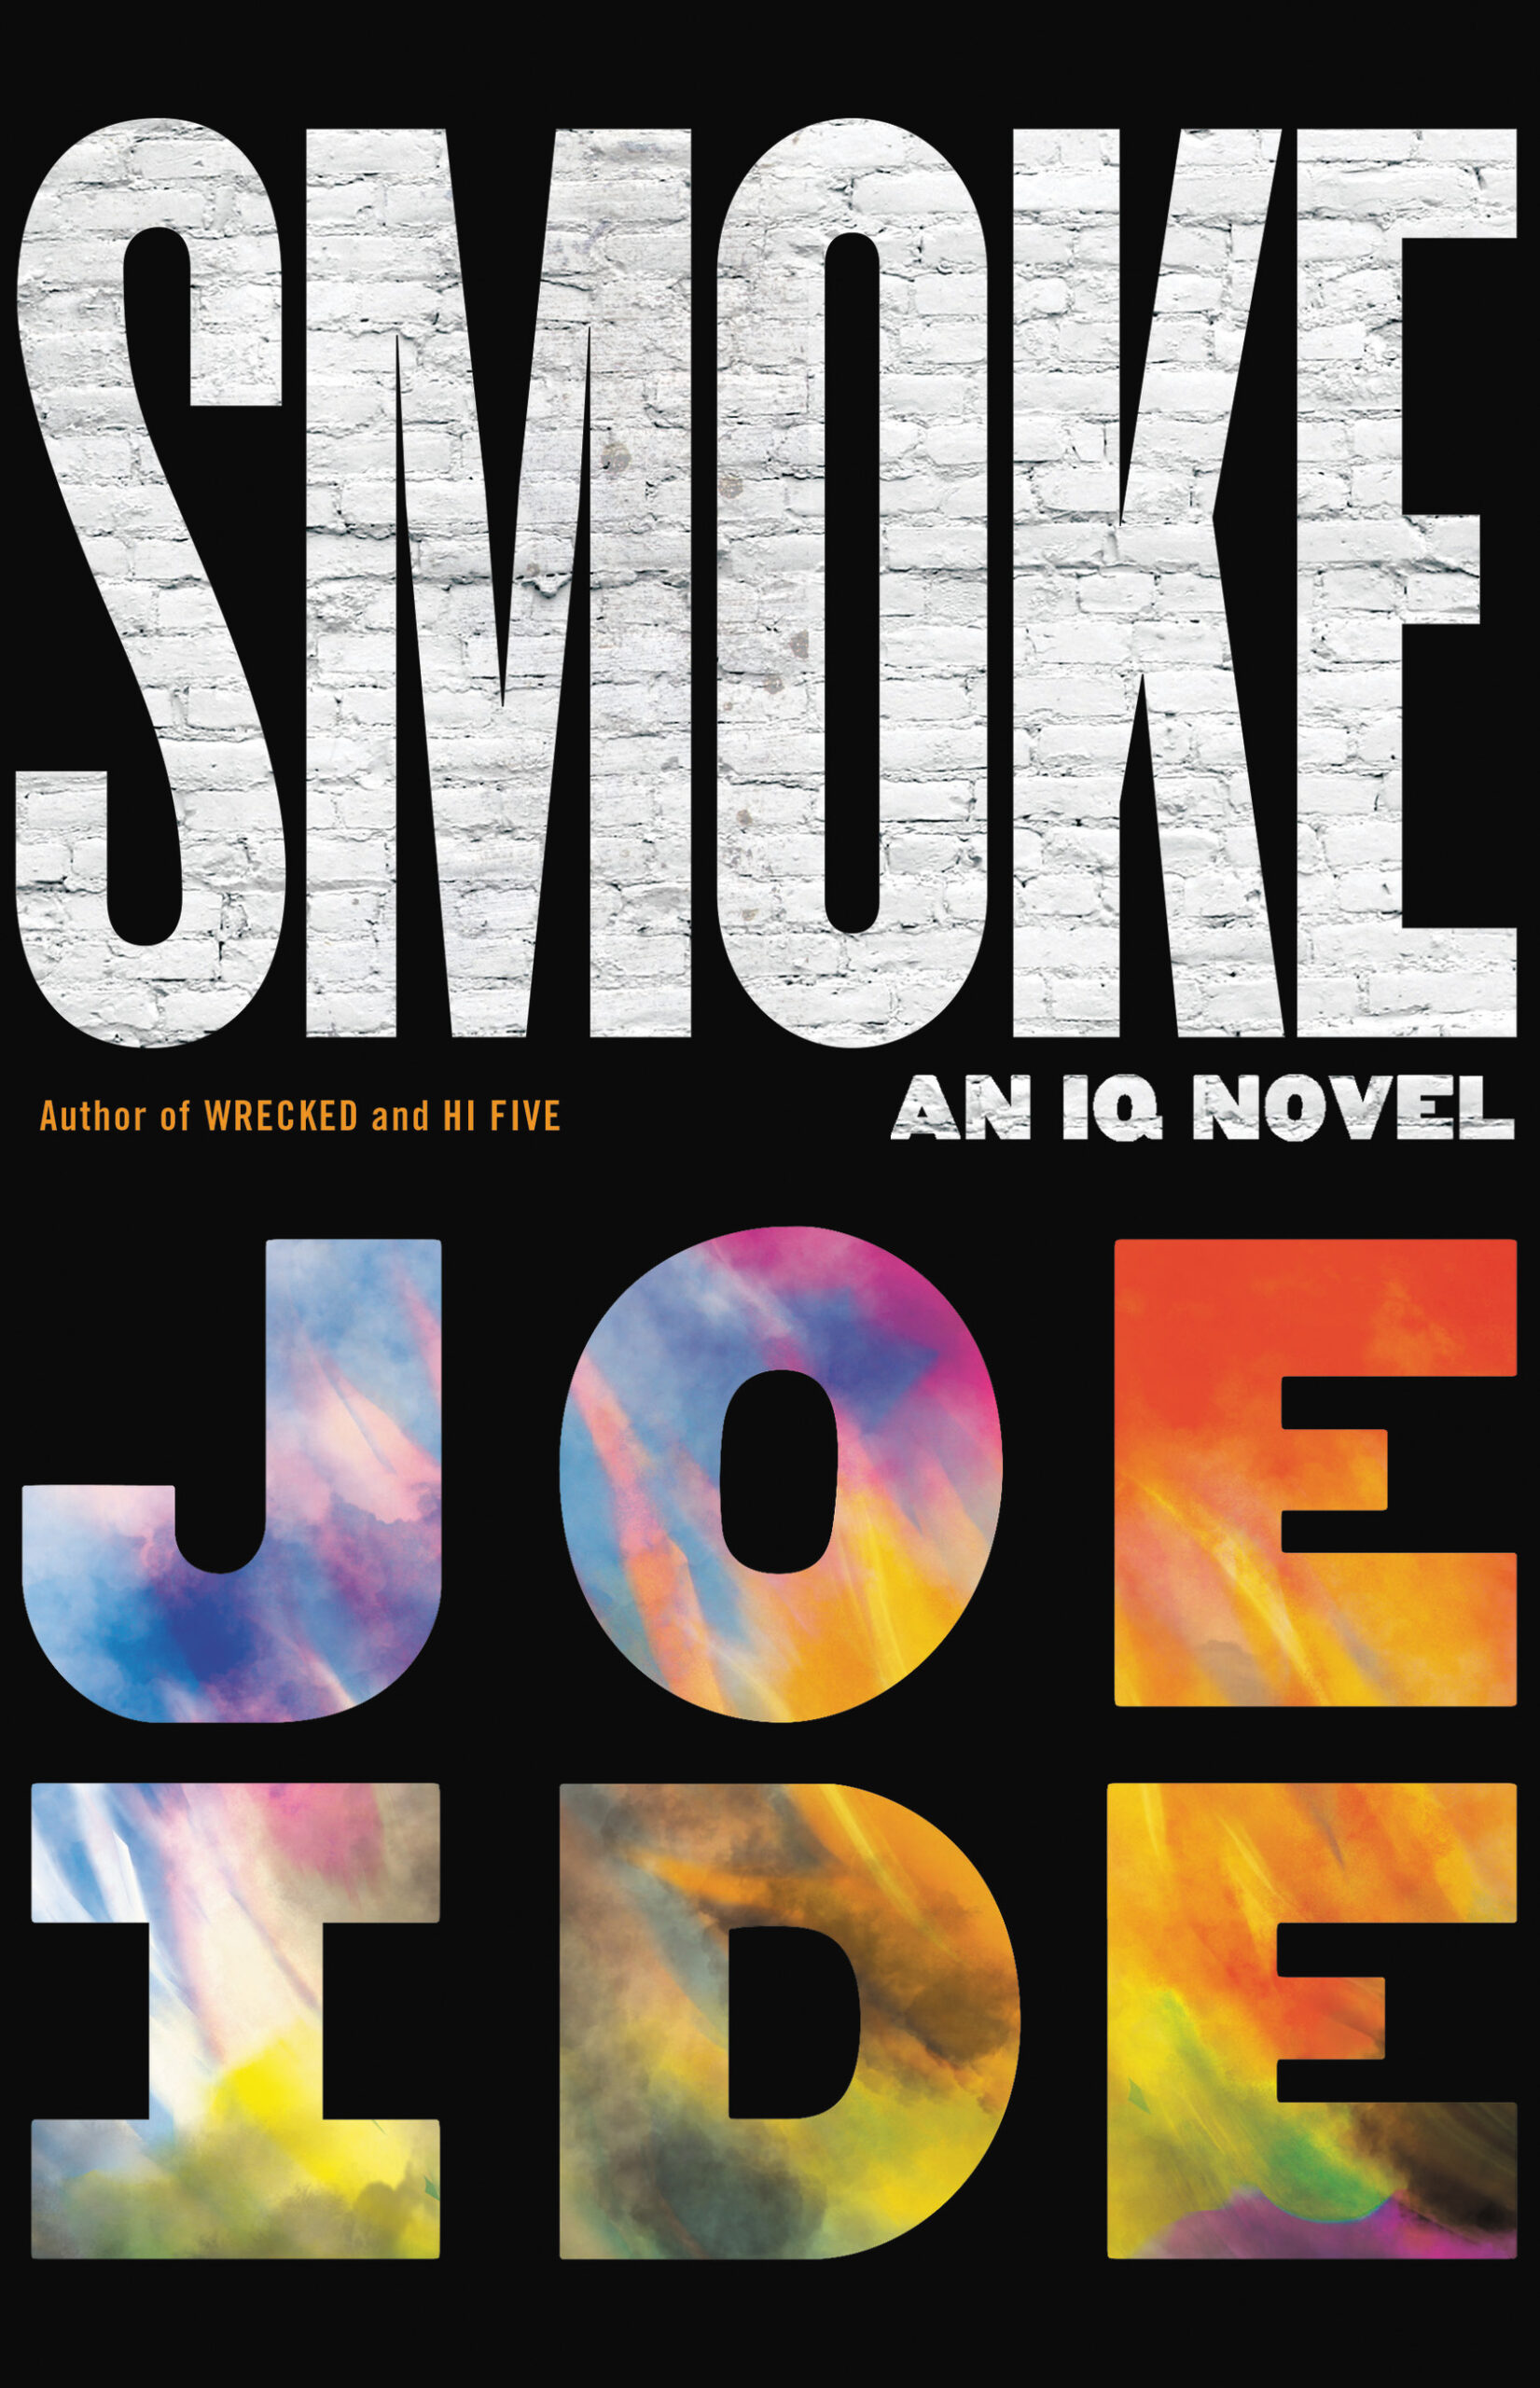 Joe Ide's Smoke book cover